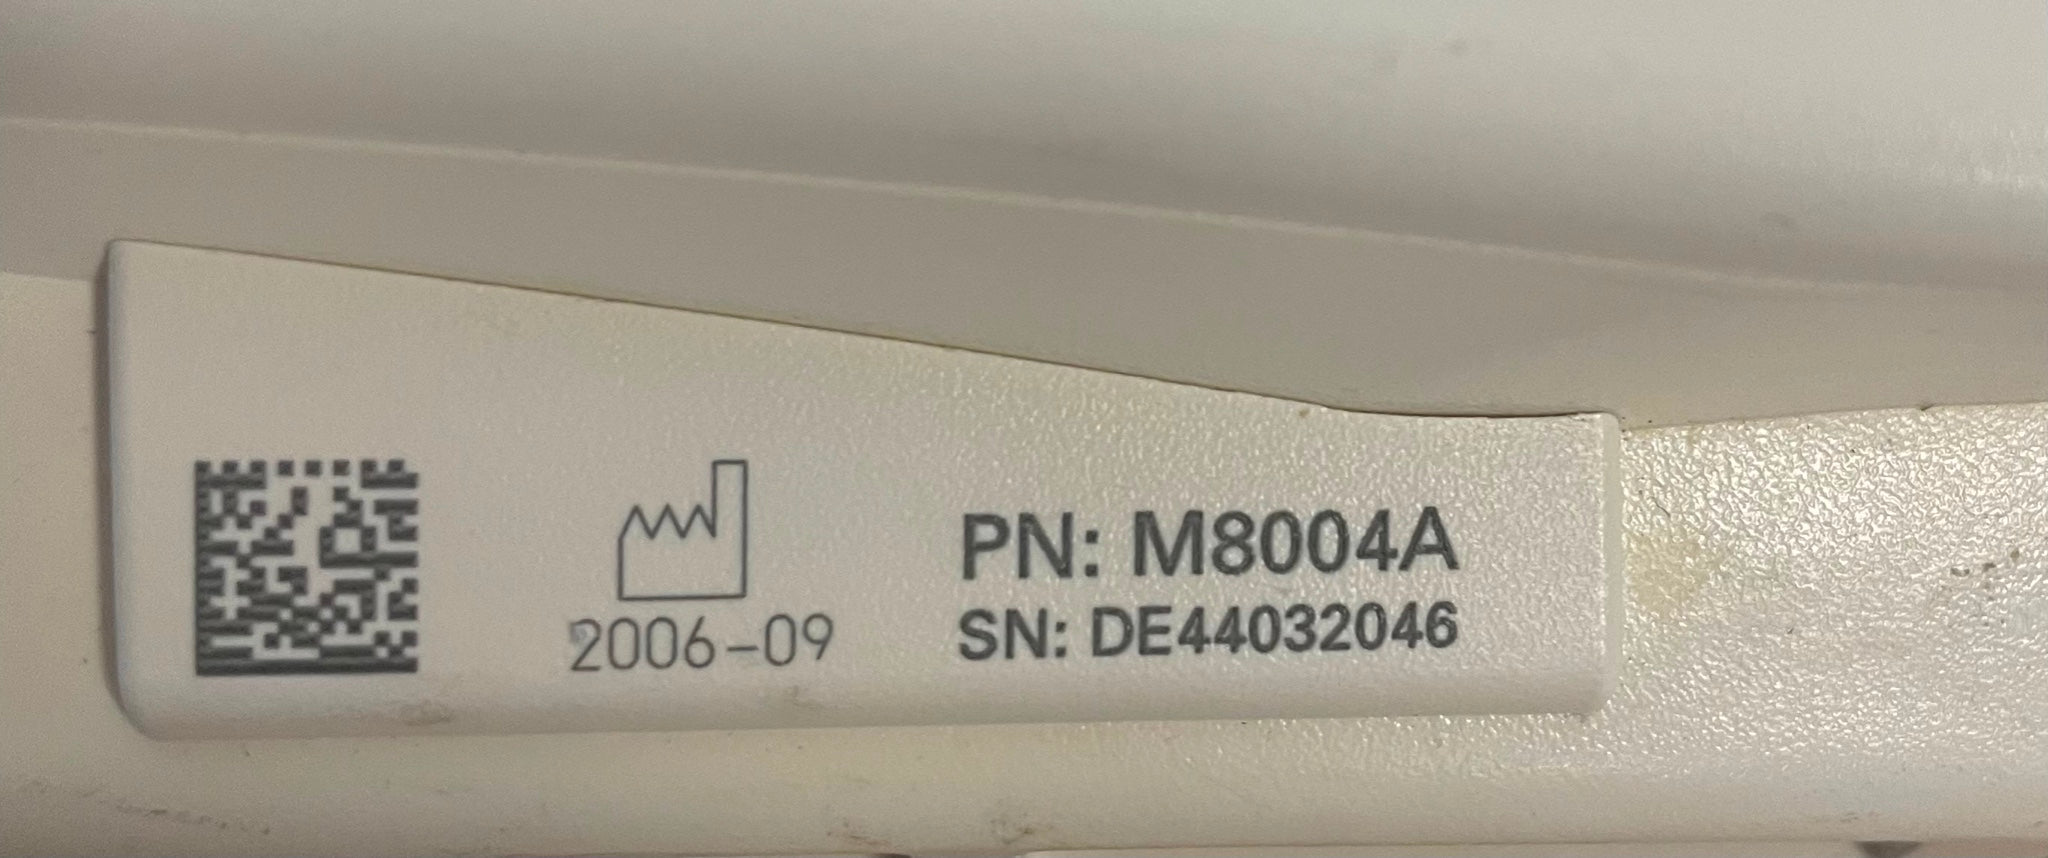 Philips Intellivue MP50 Patient Monitor SN:DE44032046 REF:M8004A DIAGNOSTIC ULTRASOUND MACHINES FOR SALE